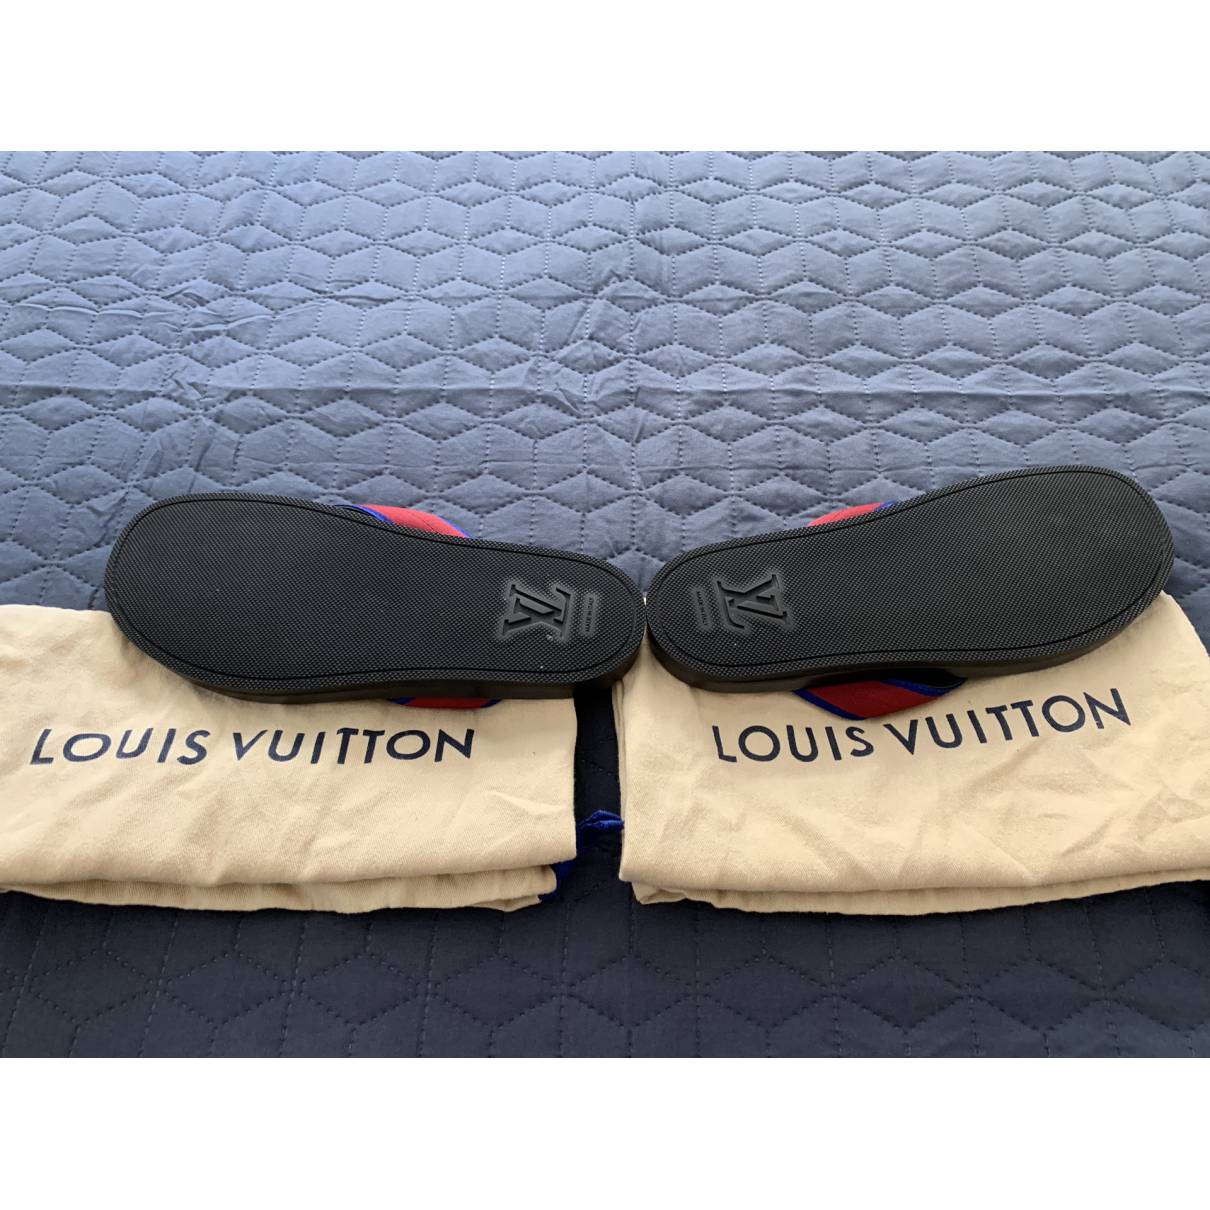 Leather sandals Louis Vuitton Multicolour size 42 EU in Leather